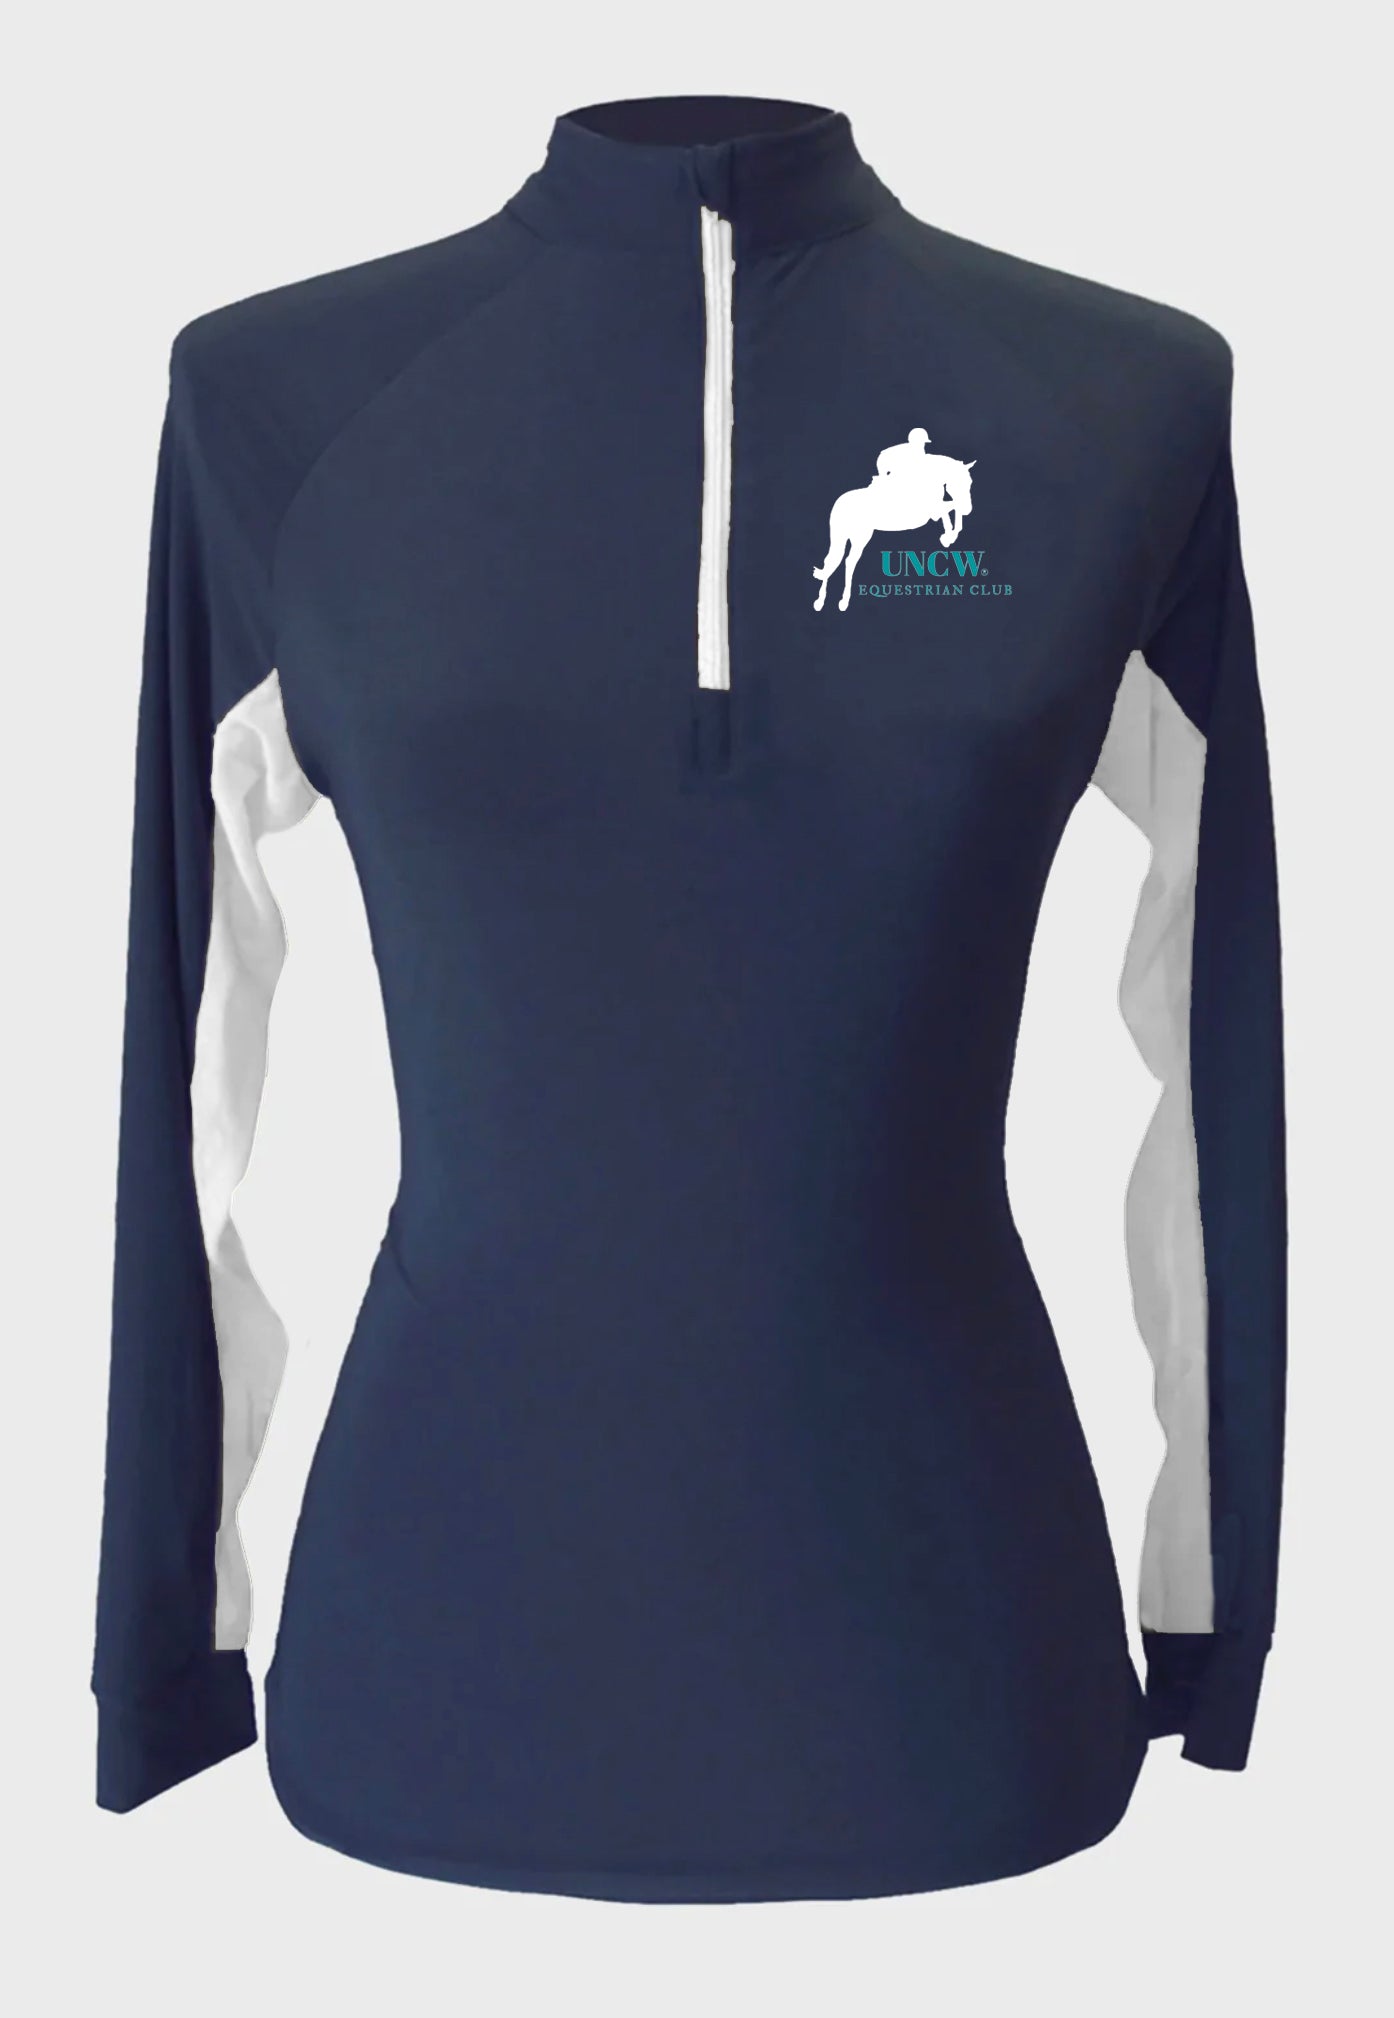 UNCW Equestrian Club Long-Sleeve Navy Sun Shirt, Ladies + Youth Sizes